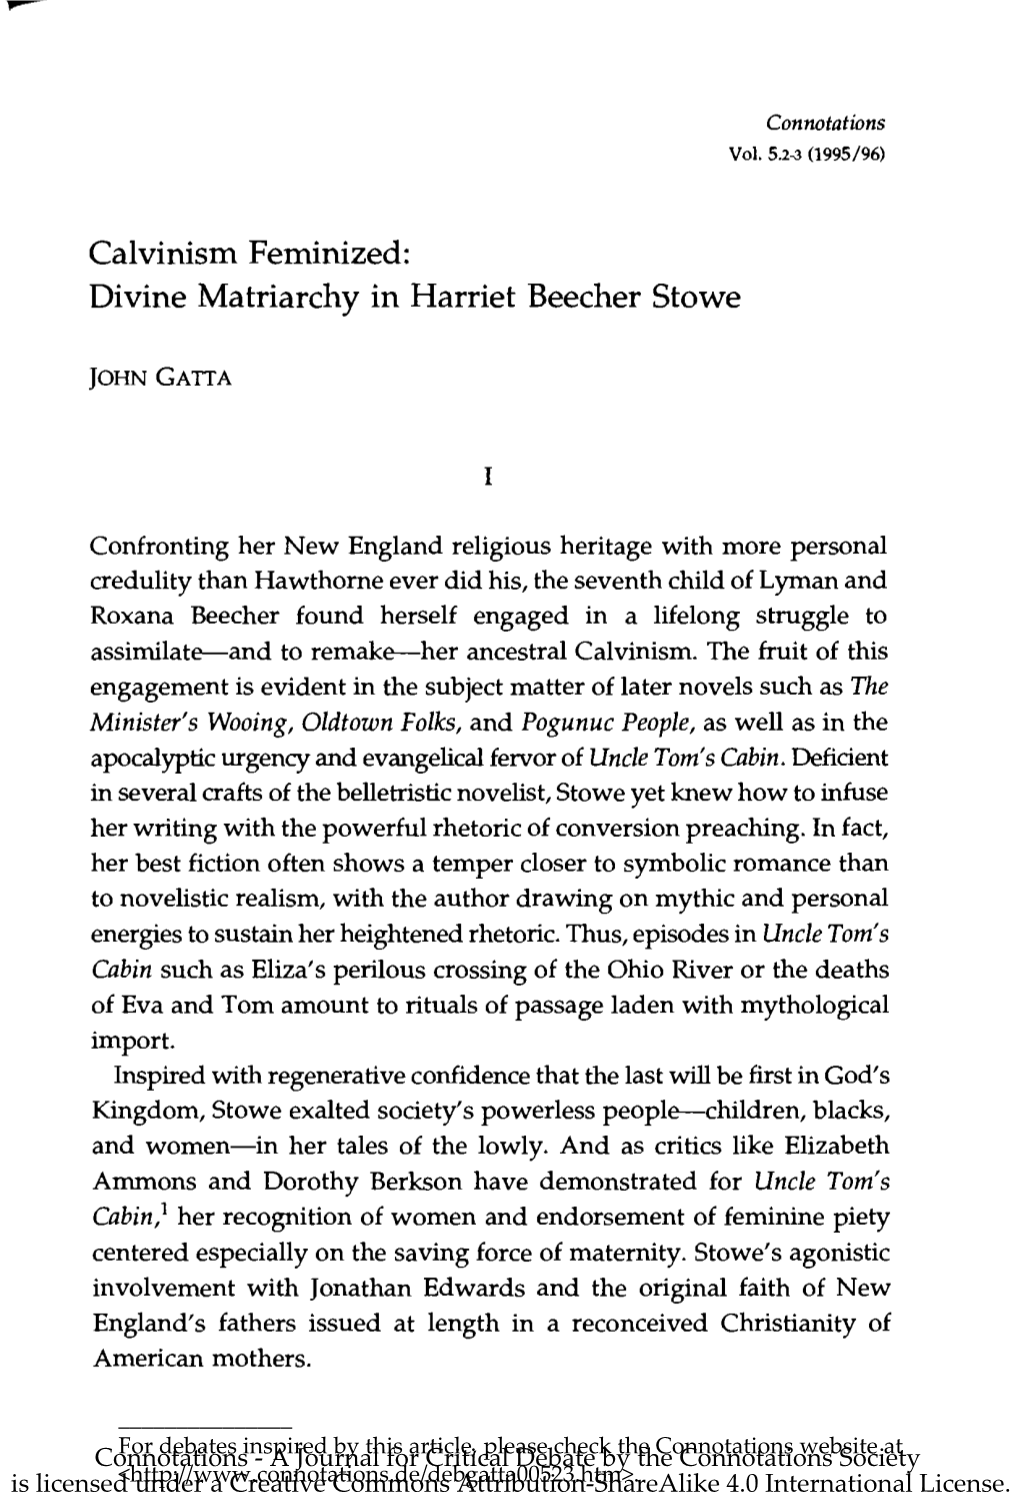 Calvinism Feminized: Divine Matriarchy in Harriet Beecher Stowe